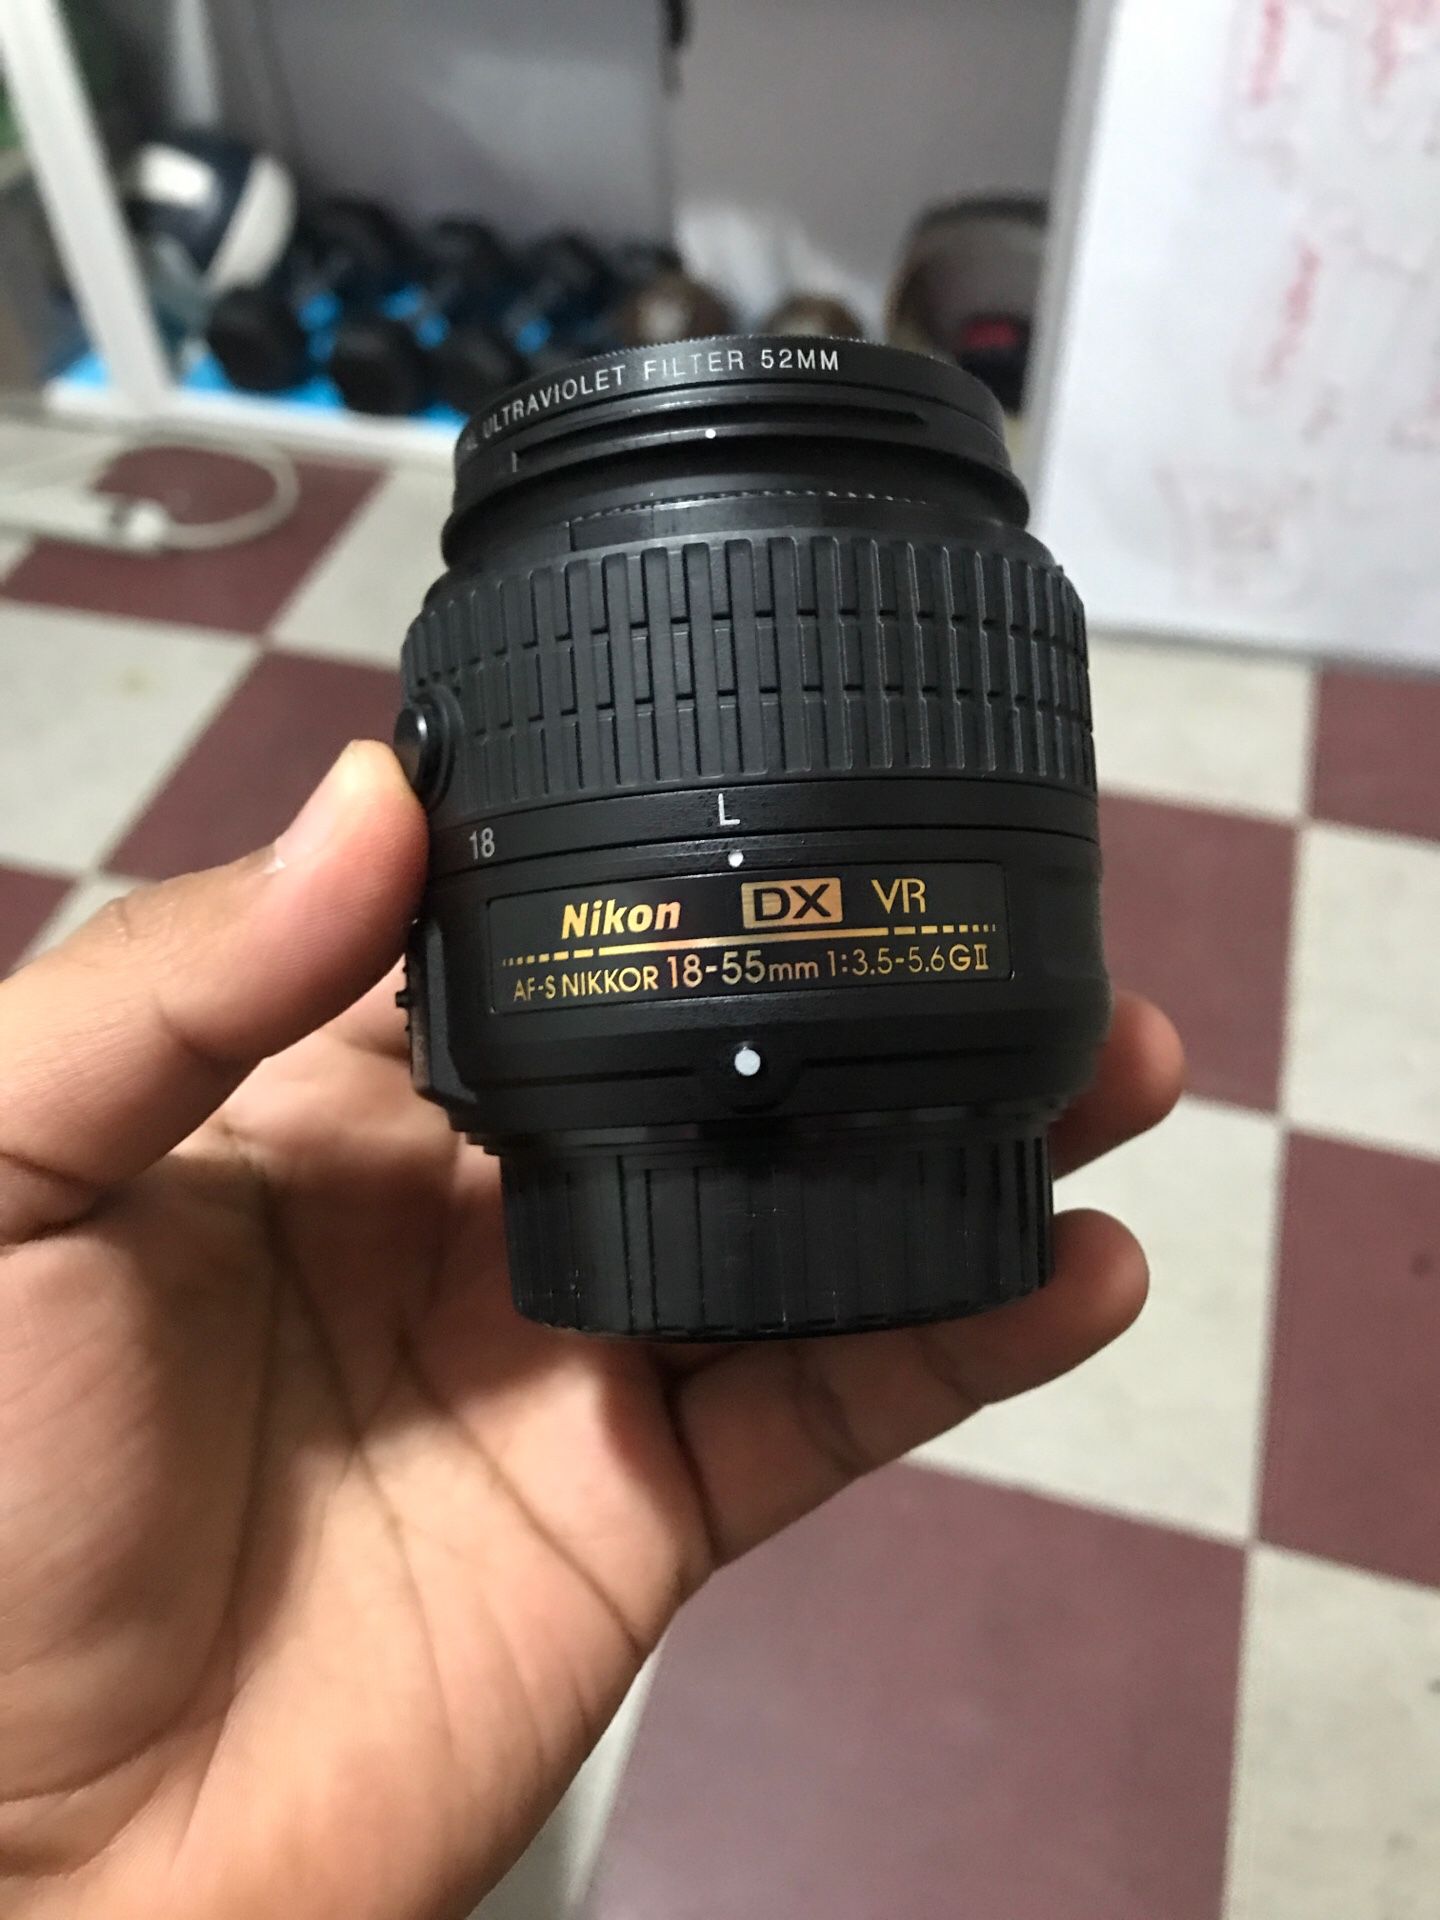 Nikon kit lens zoom 18-55mm f/3.5 -5.6